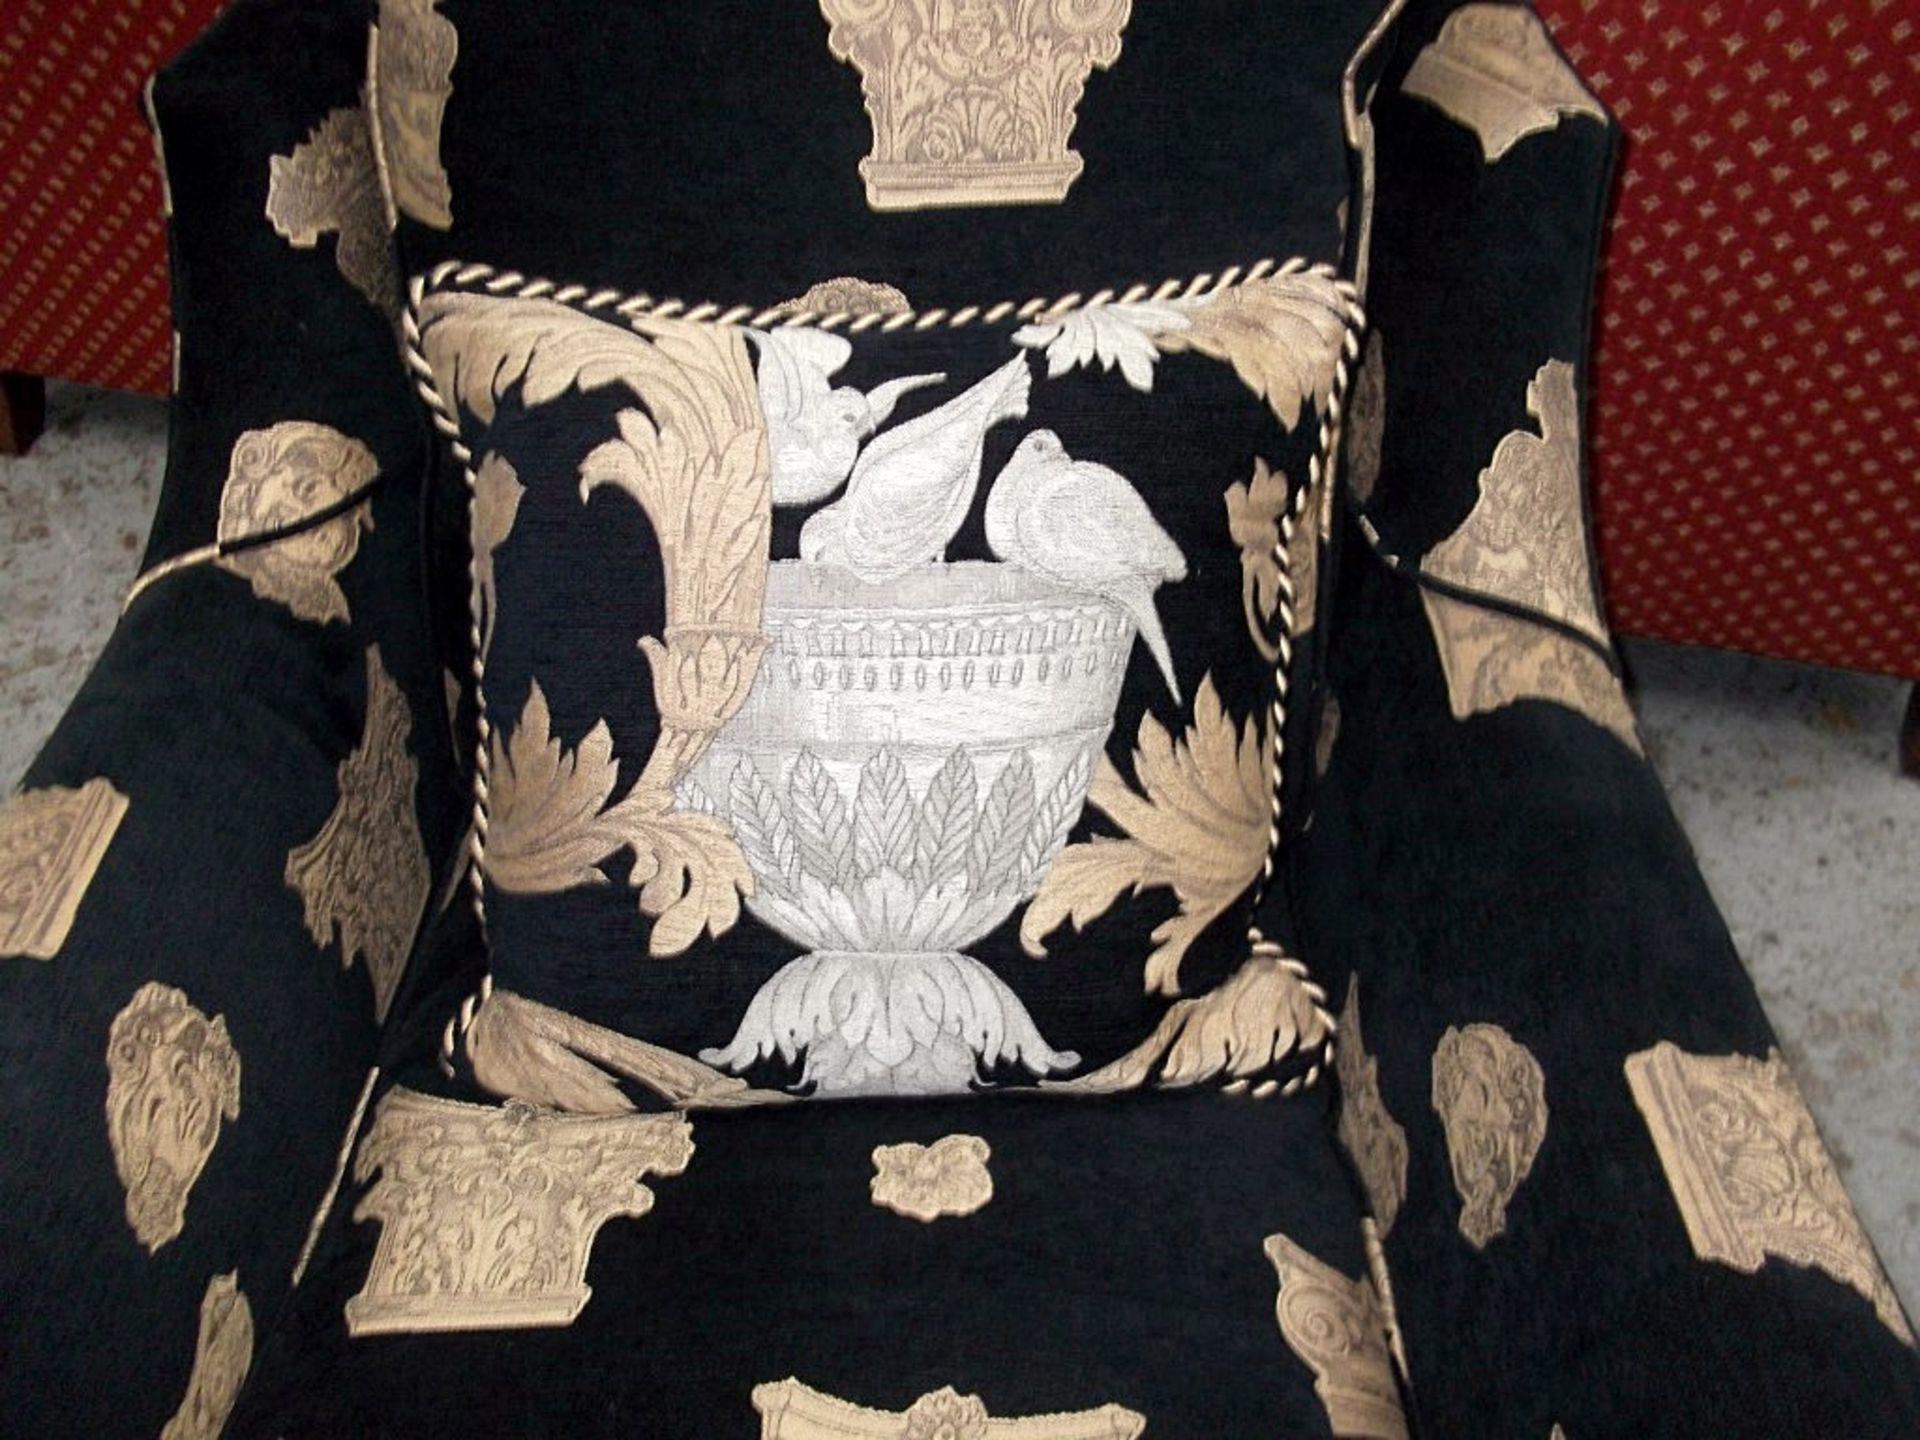 1 x DURESTA Premium "George" Ladies Chair - Features A Versace-style Design - CL050 - Ref: - Image 6 of 6